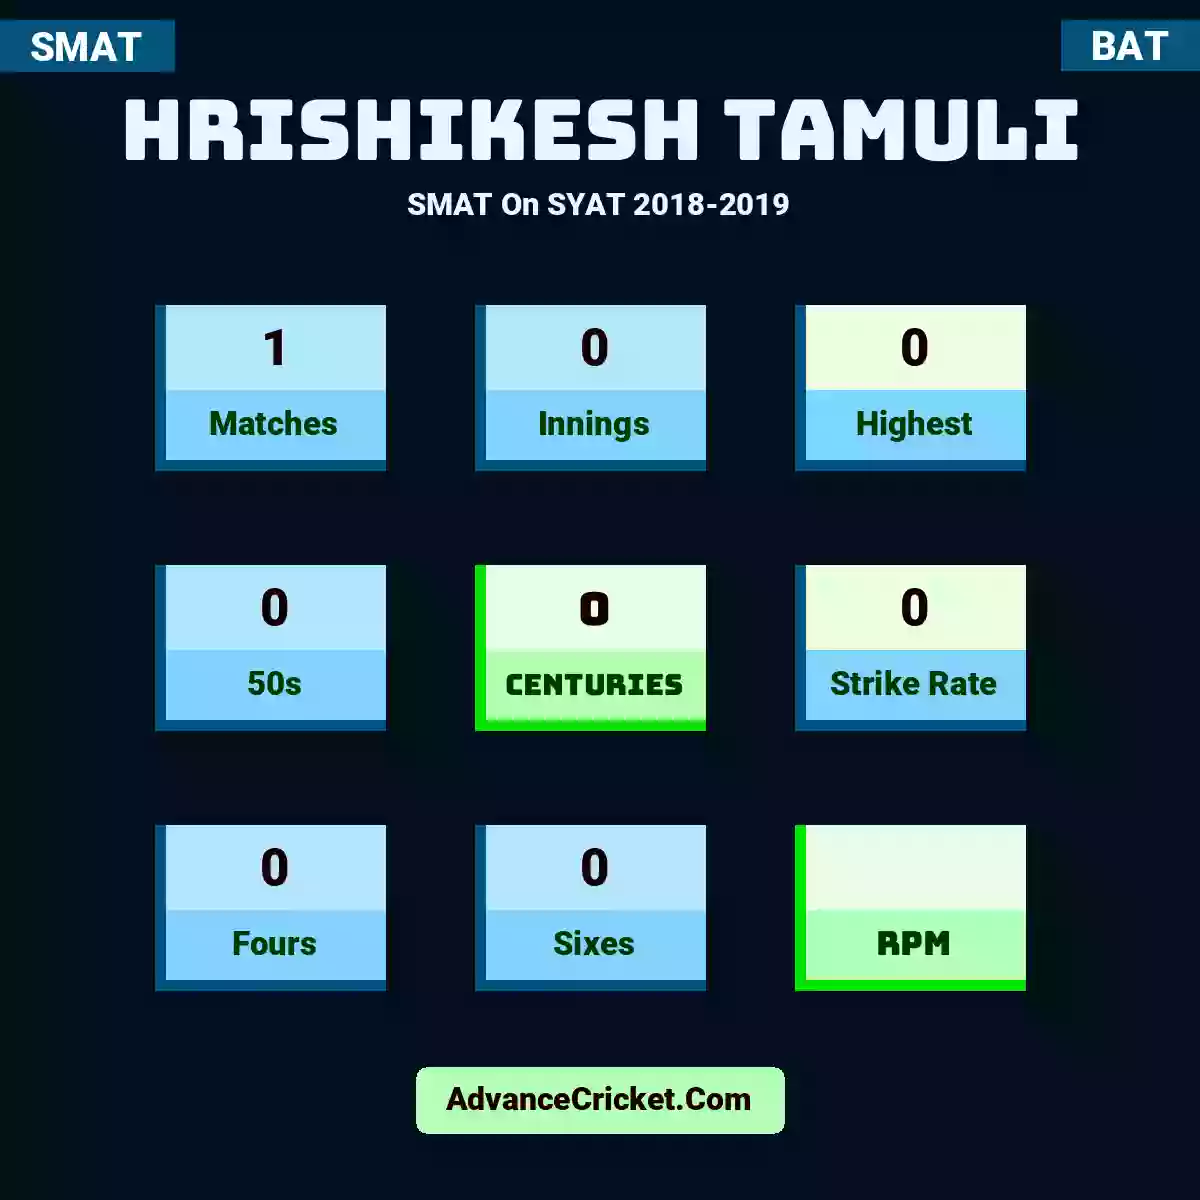 Hrishikesh Tamuli SMAT  On SYAT 2018-2019, Hrishikesh Tamuli played 1 matches, scored 0 runs as highest, 0 half-centuries, and 0 centuries, with a strike rate of 0. H.Tamuli hit 0 fours and 0 sixes.